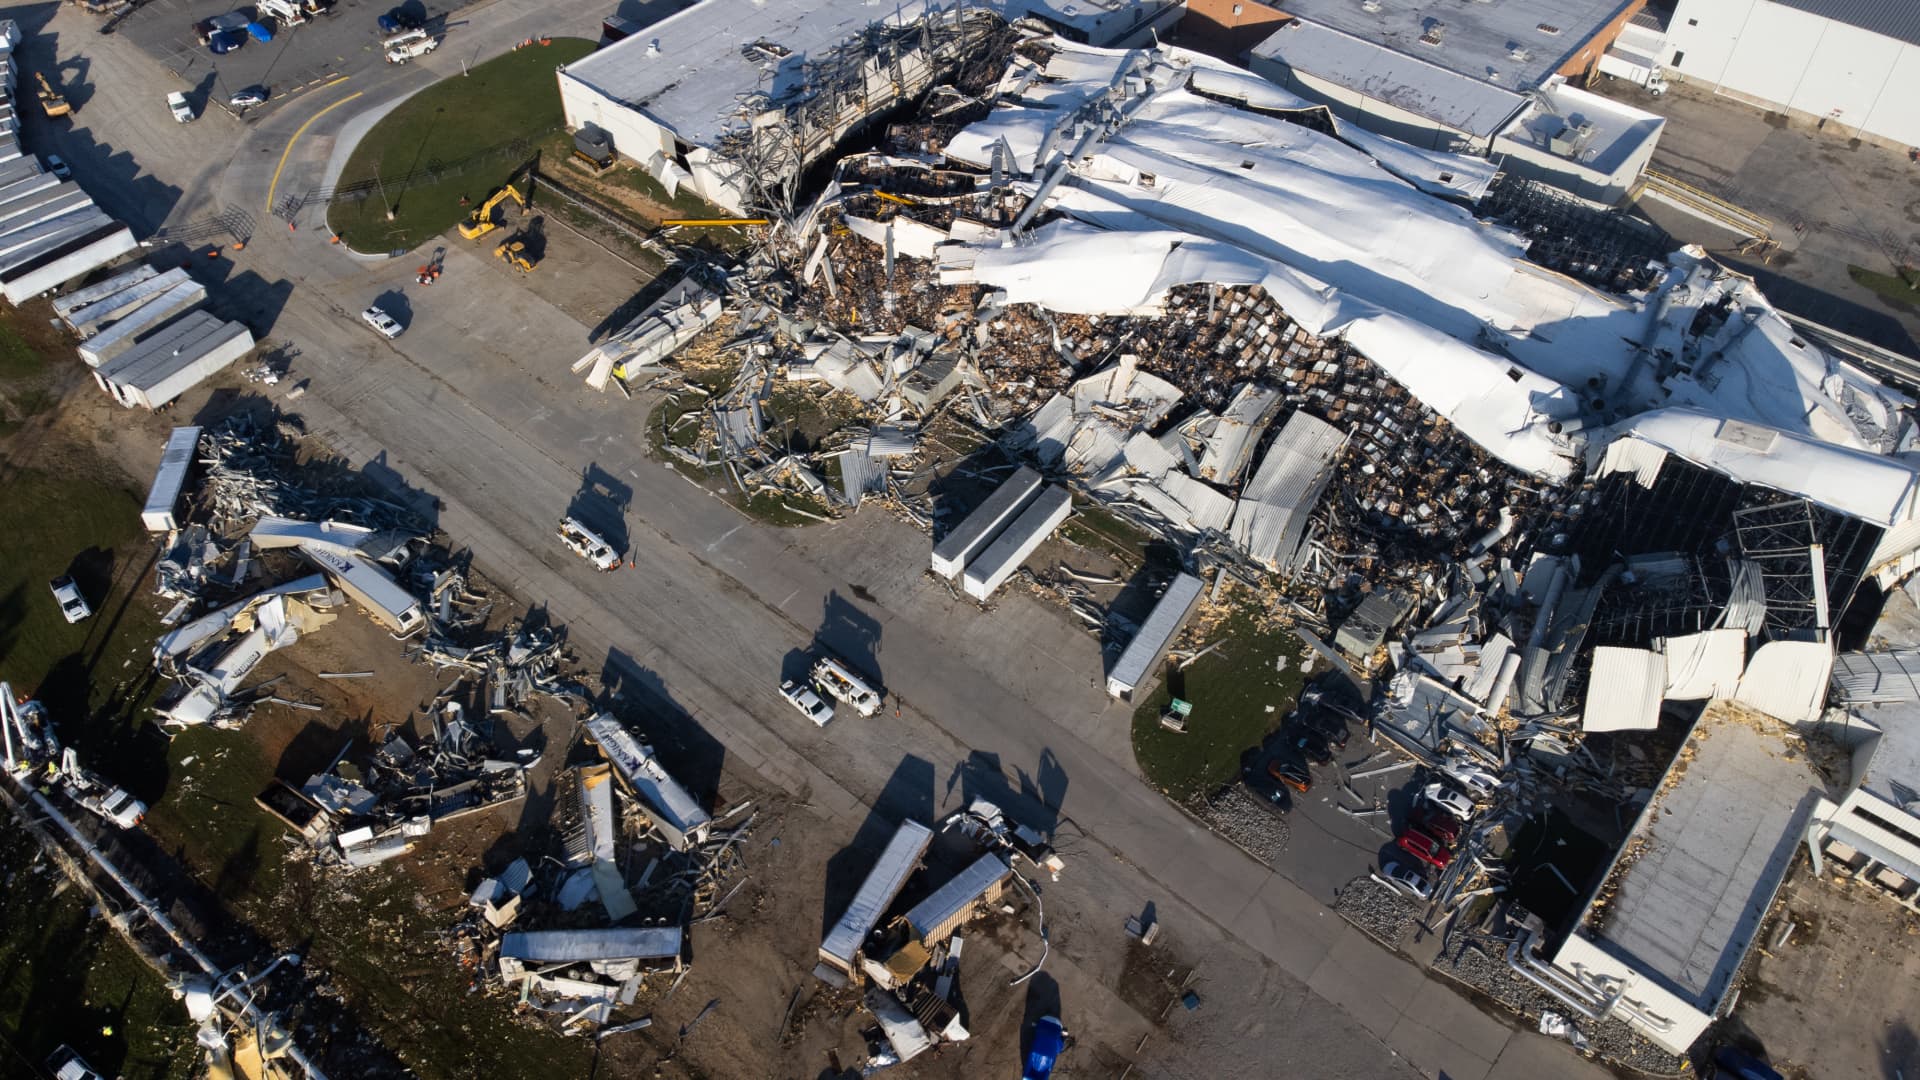 Pfizer says no major tornado damage to drug manufacturing areas of North Carolina facility